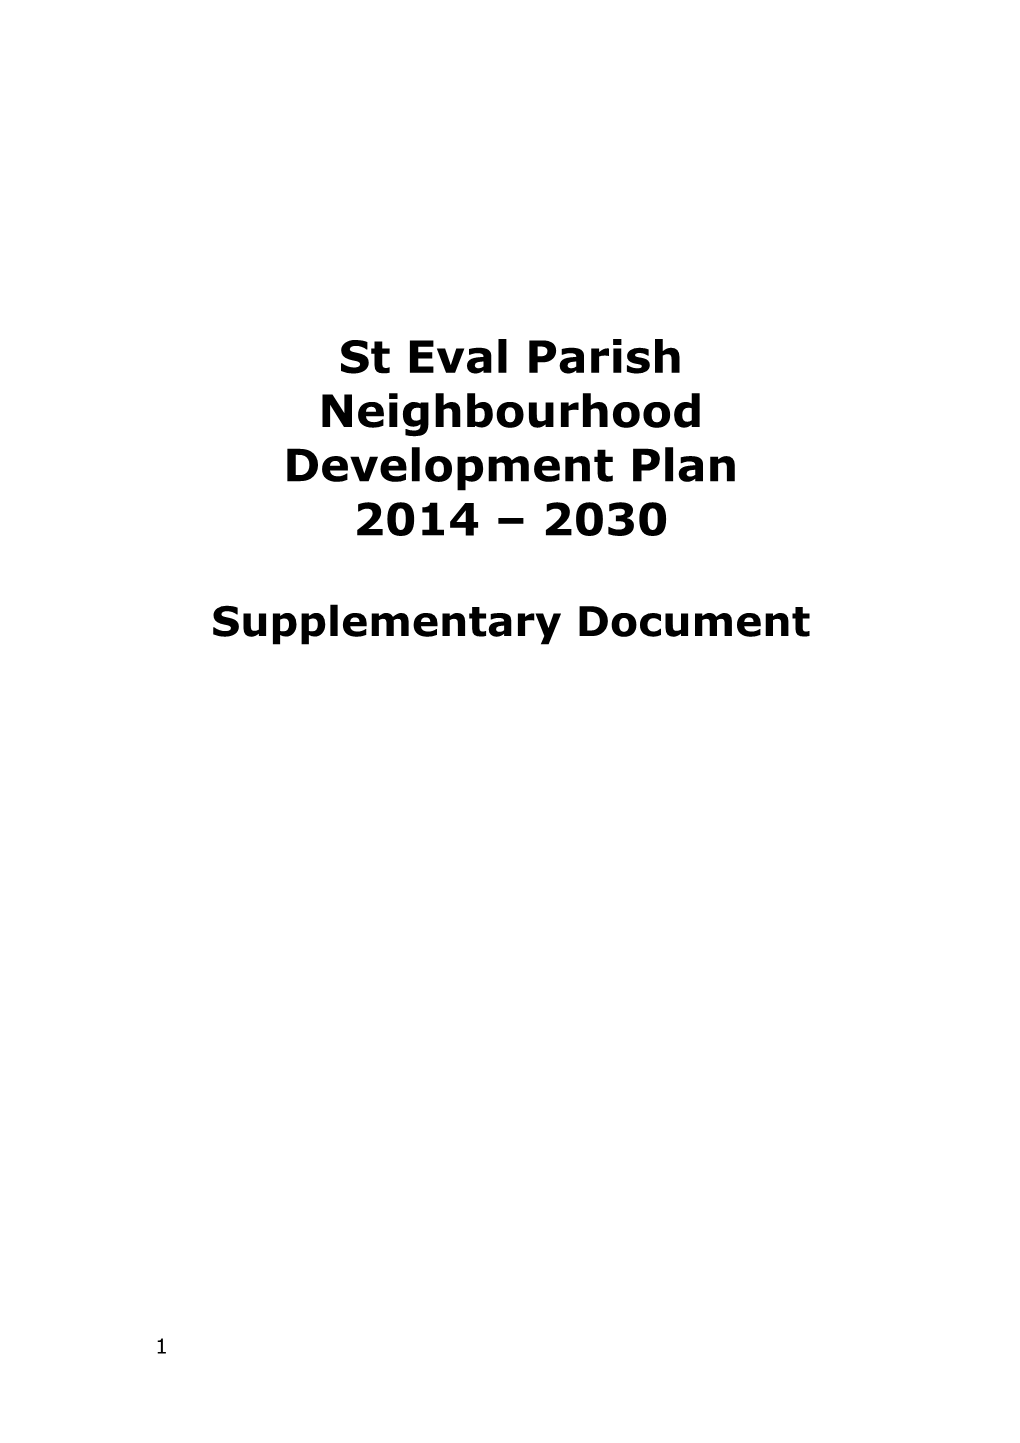 St Eval Parish Neighbourhood Development Plan